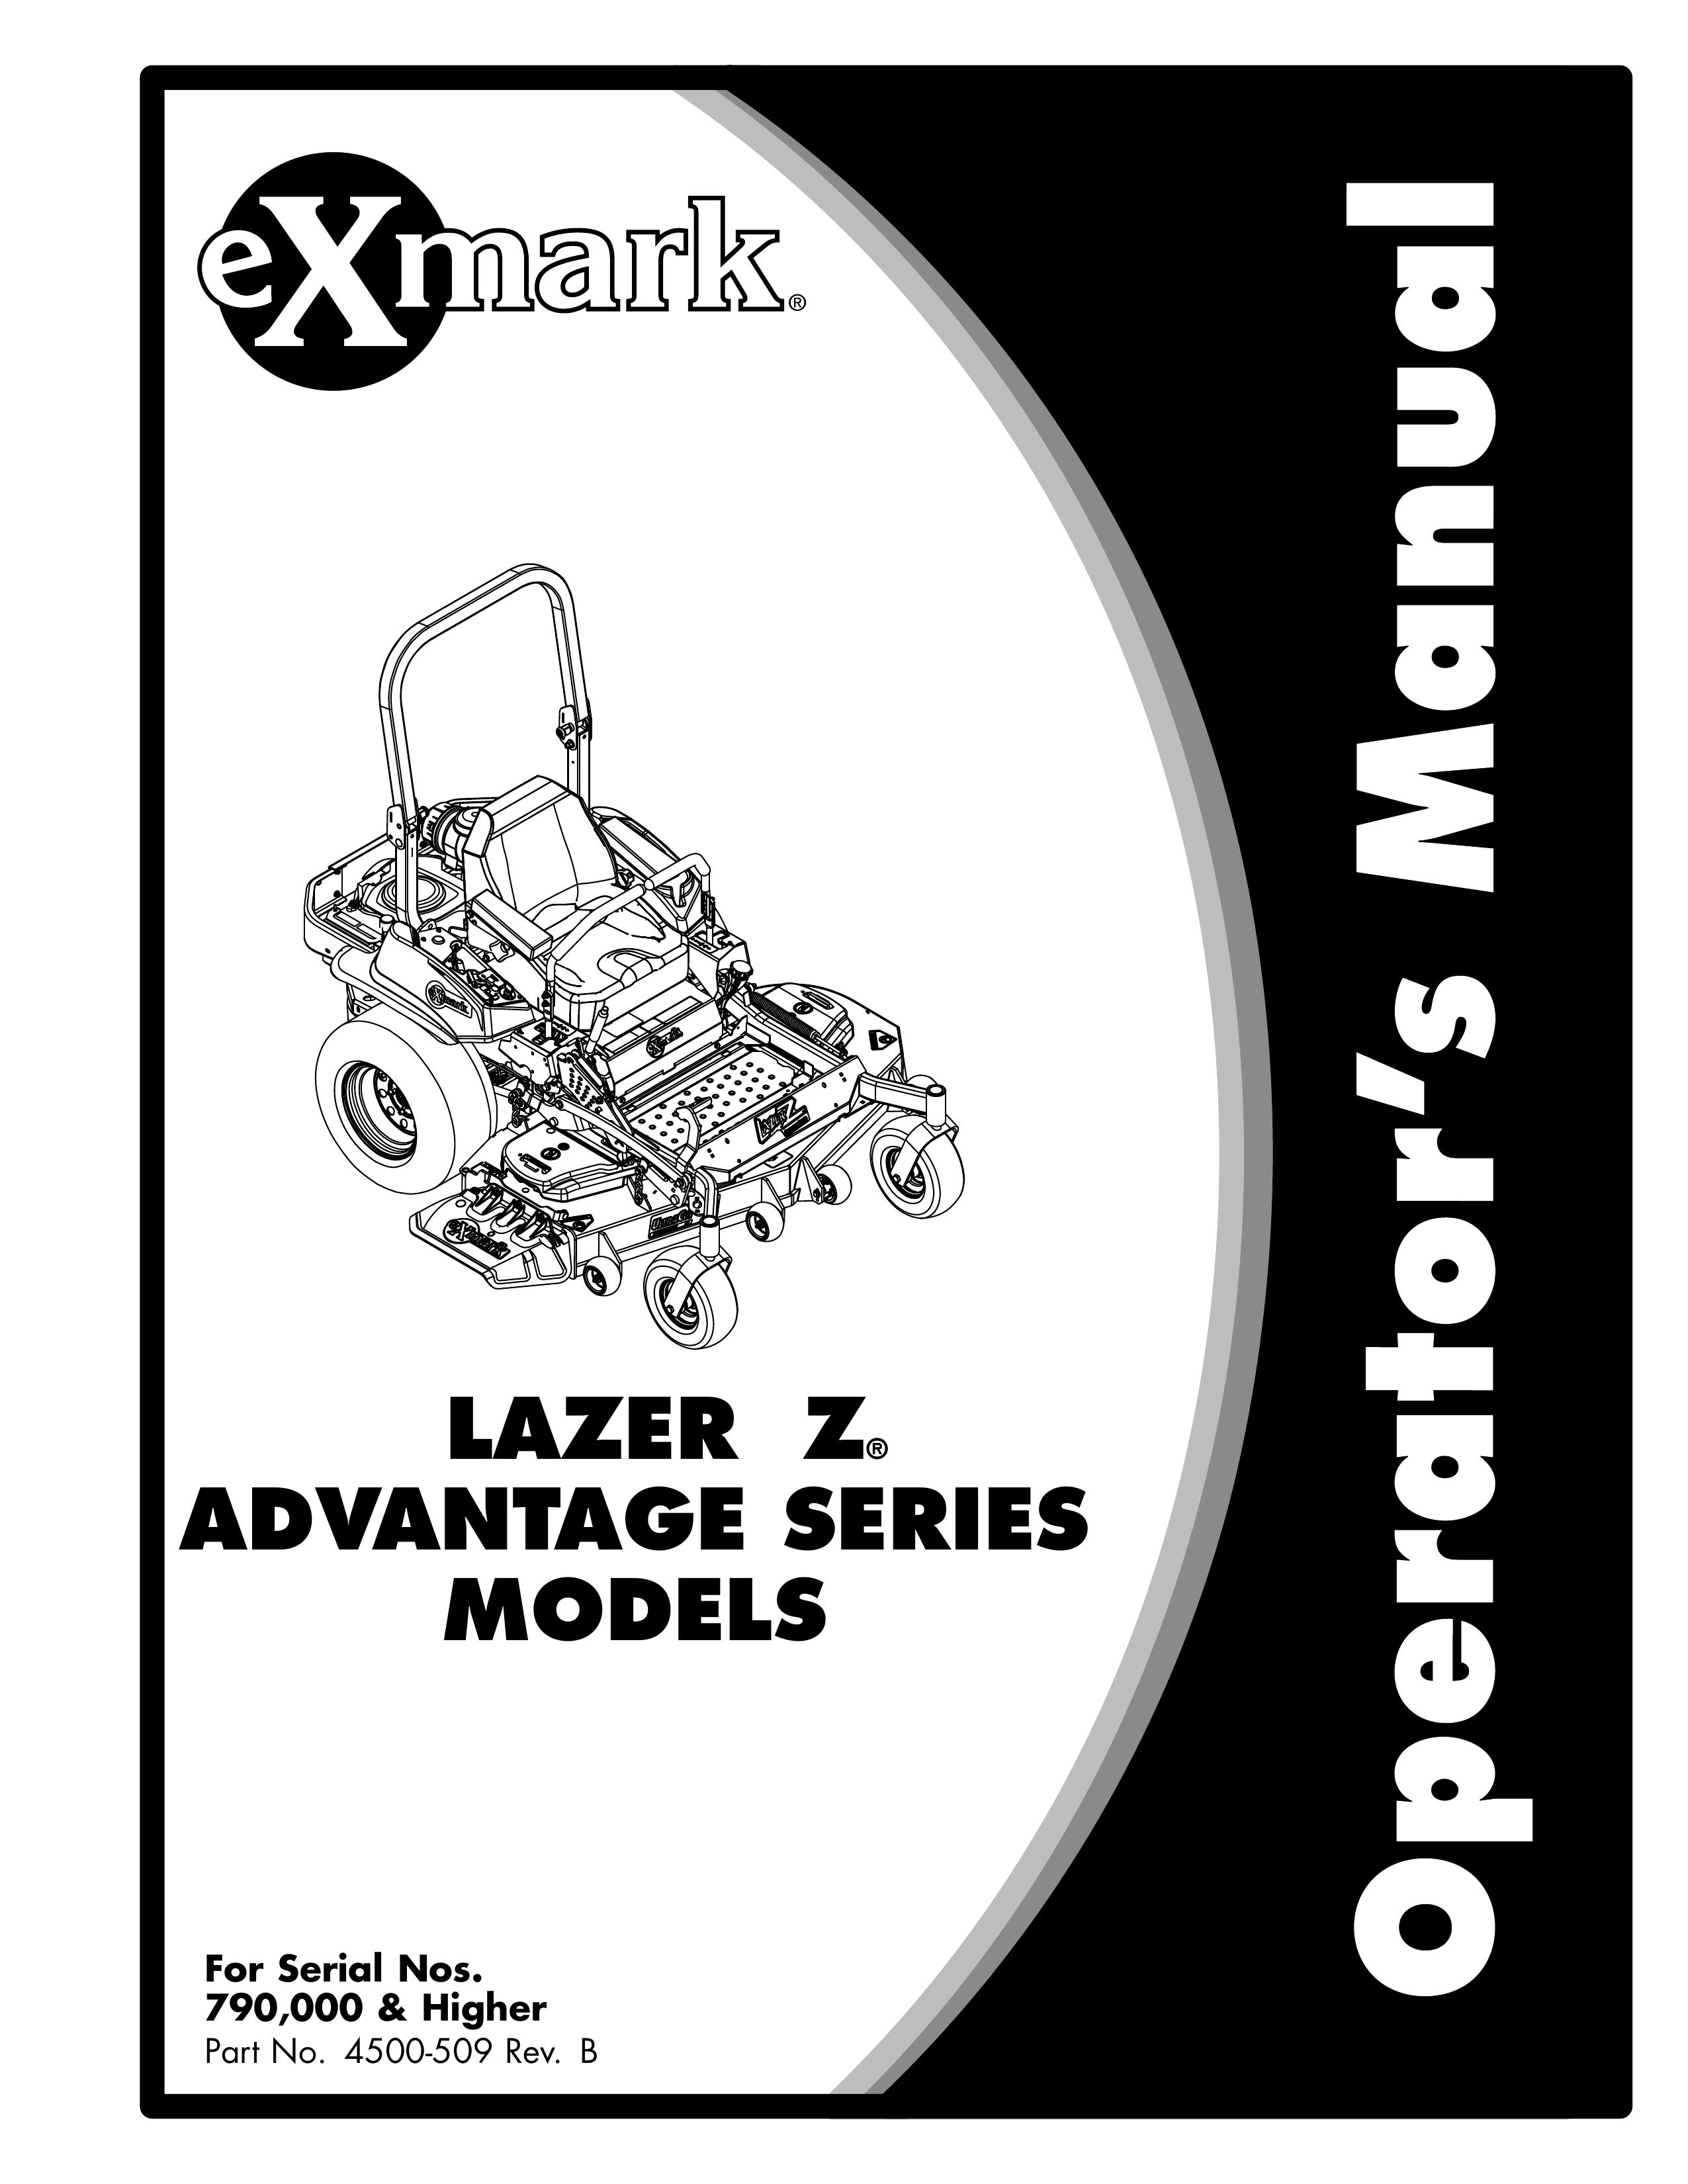 Exmark 000 & Higher Lawn Mower User Manual